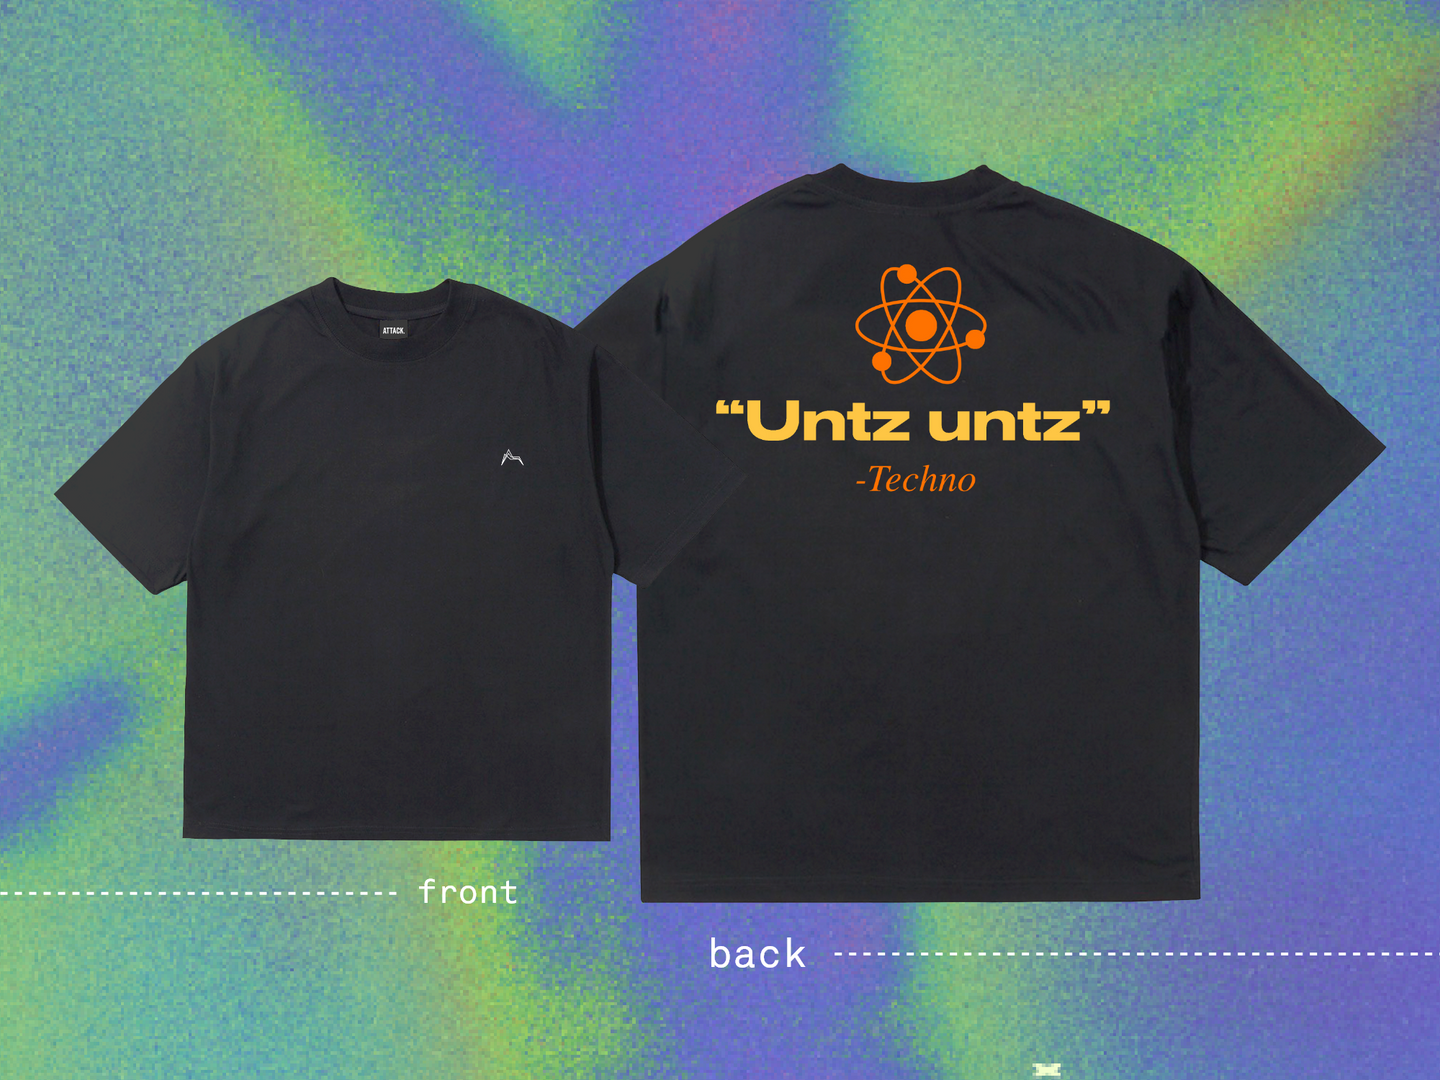 dual-front-and-back-view-of-untz-untz-t-shirt